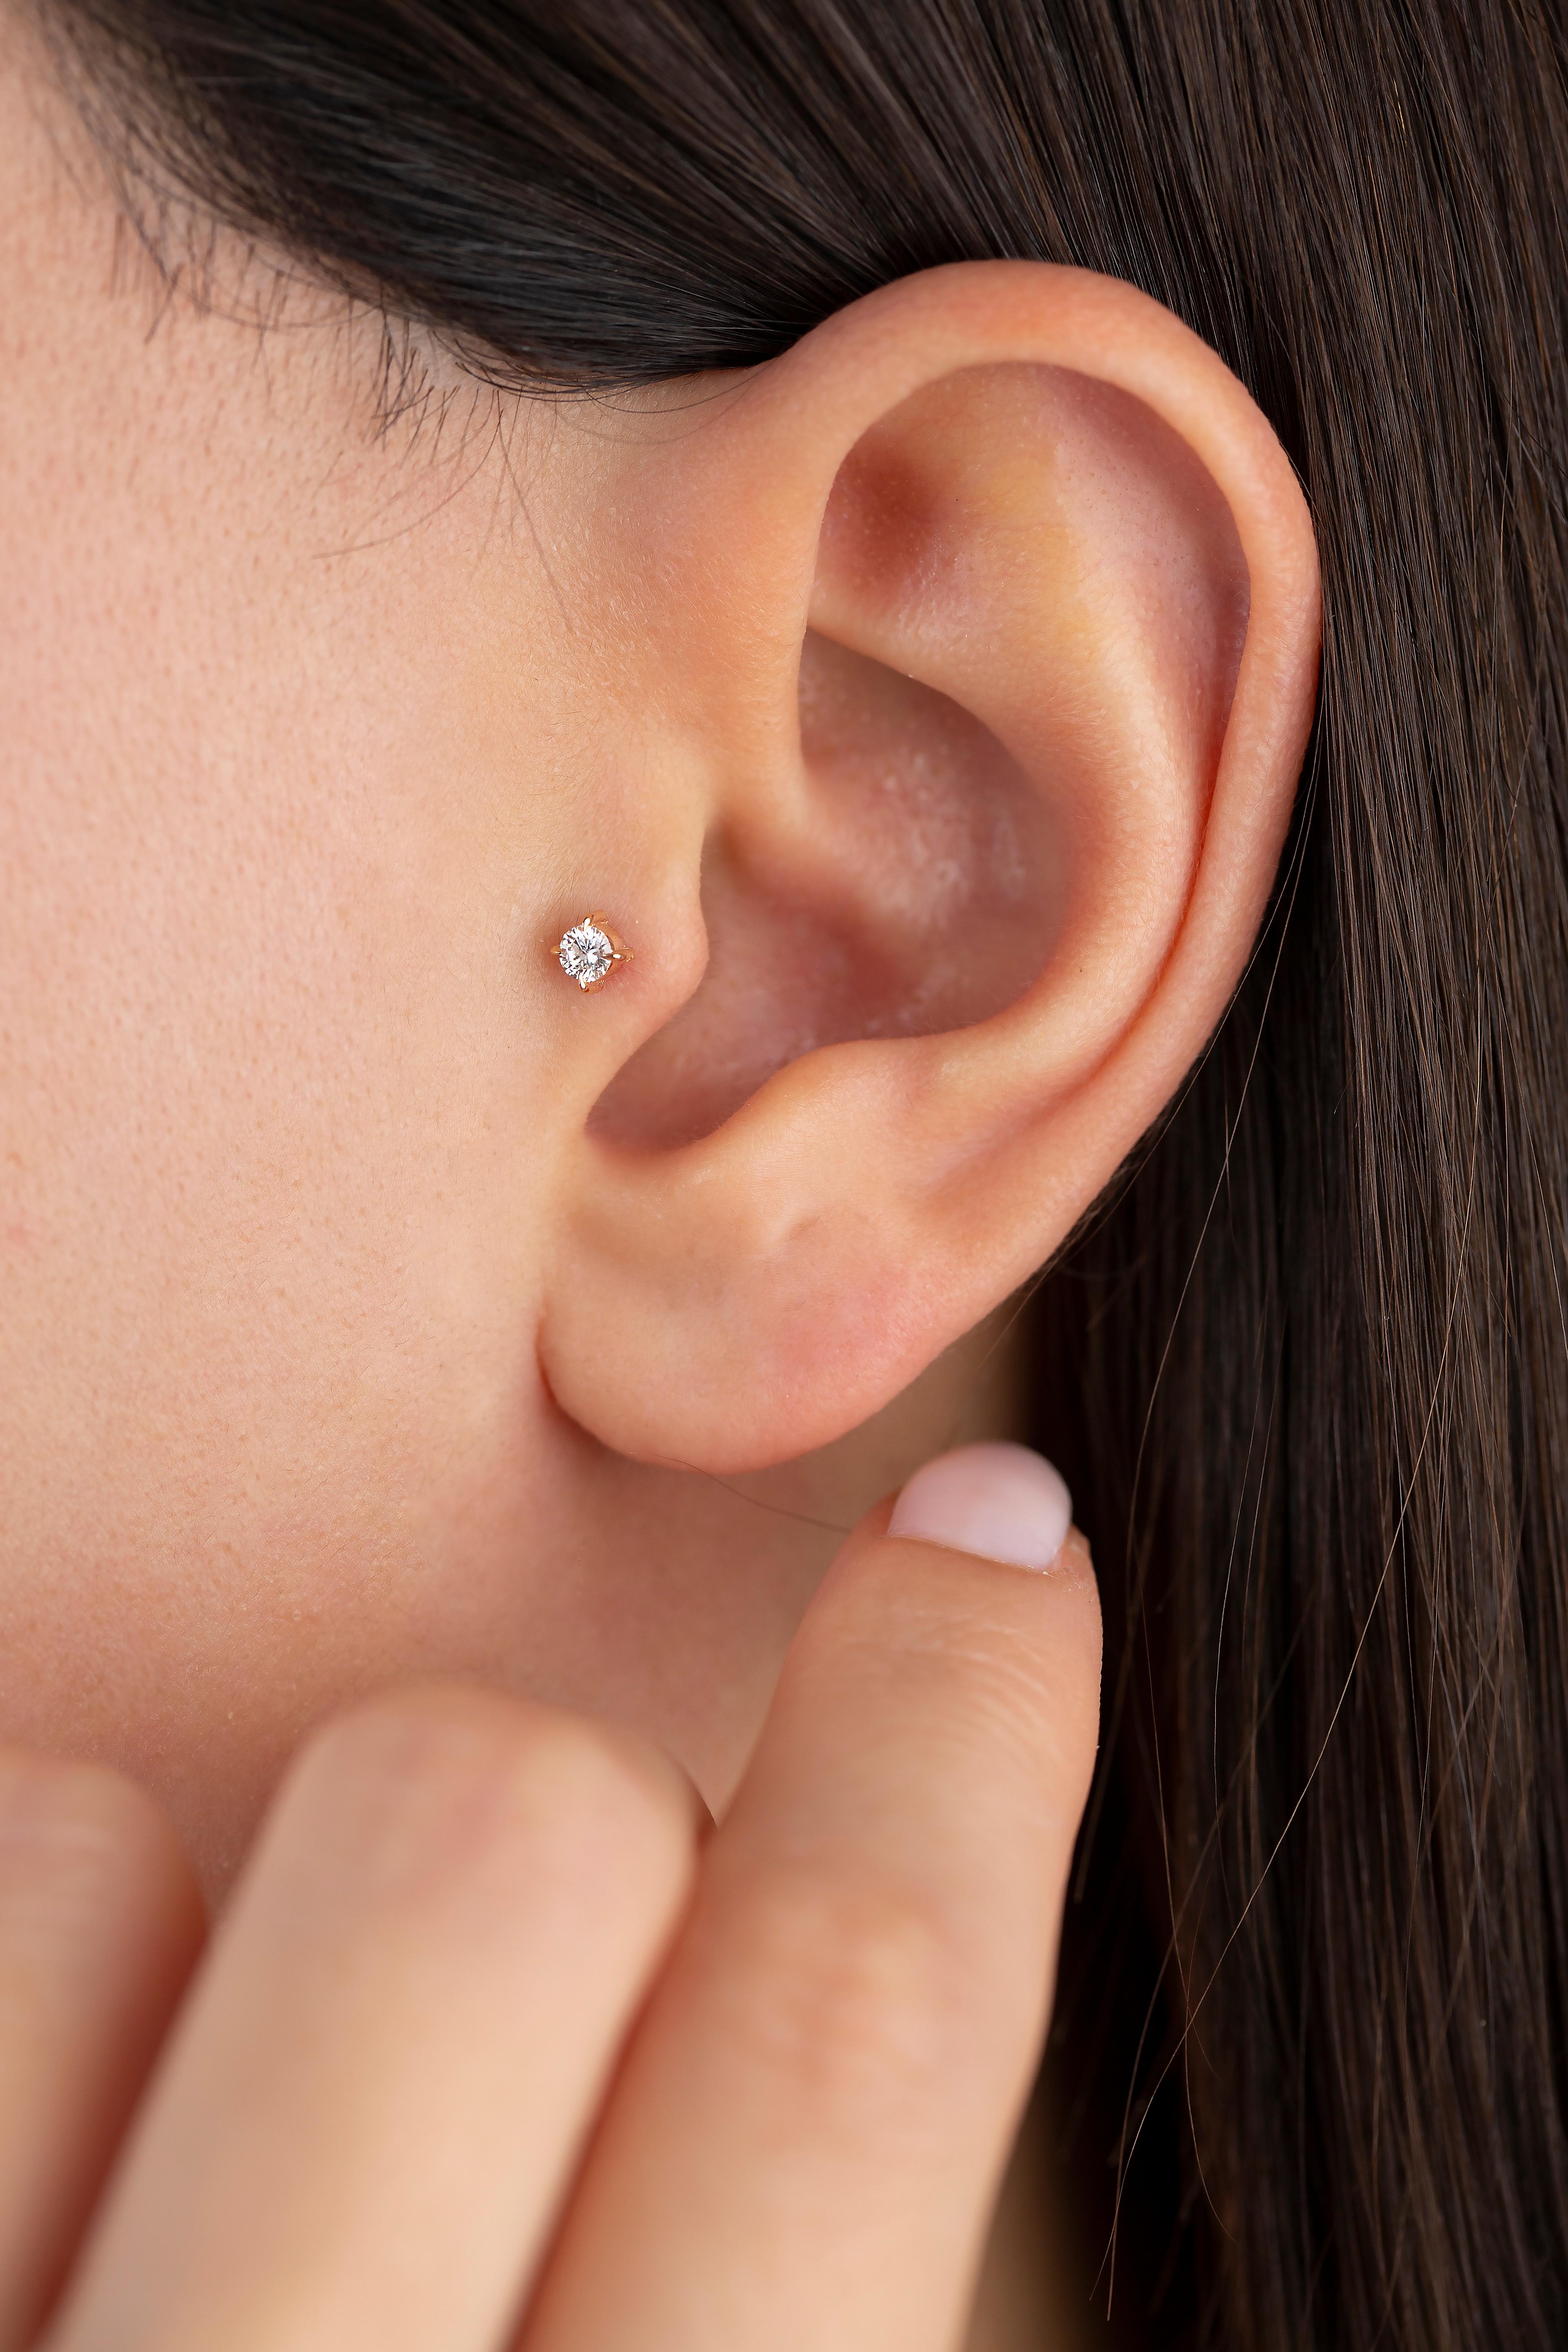 helix and lobe earring